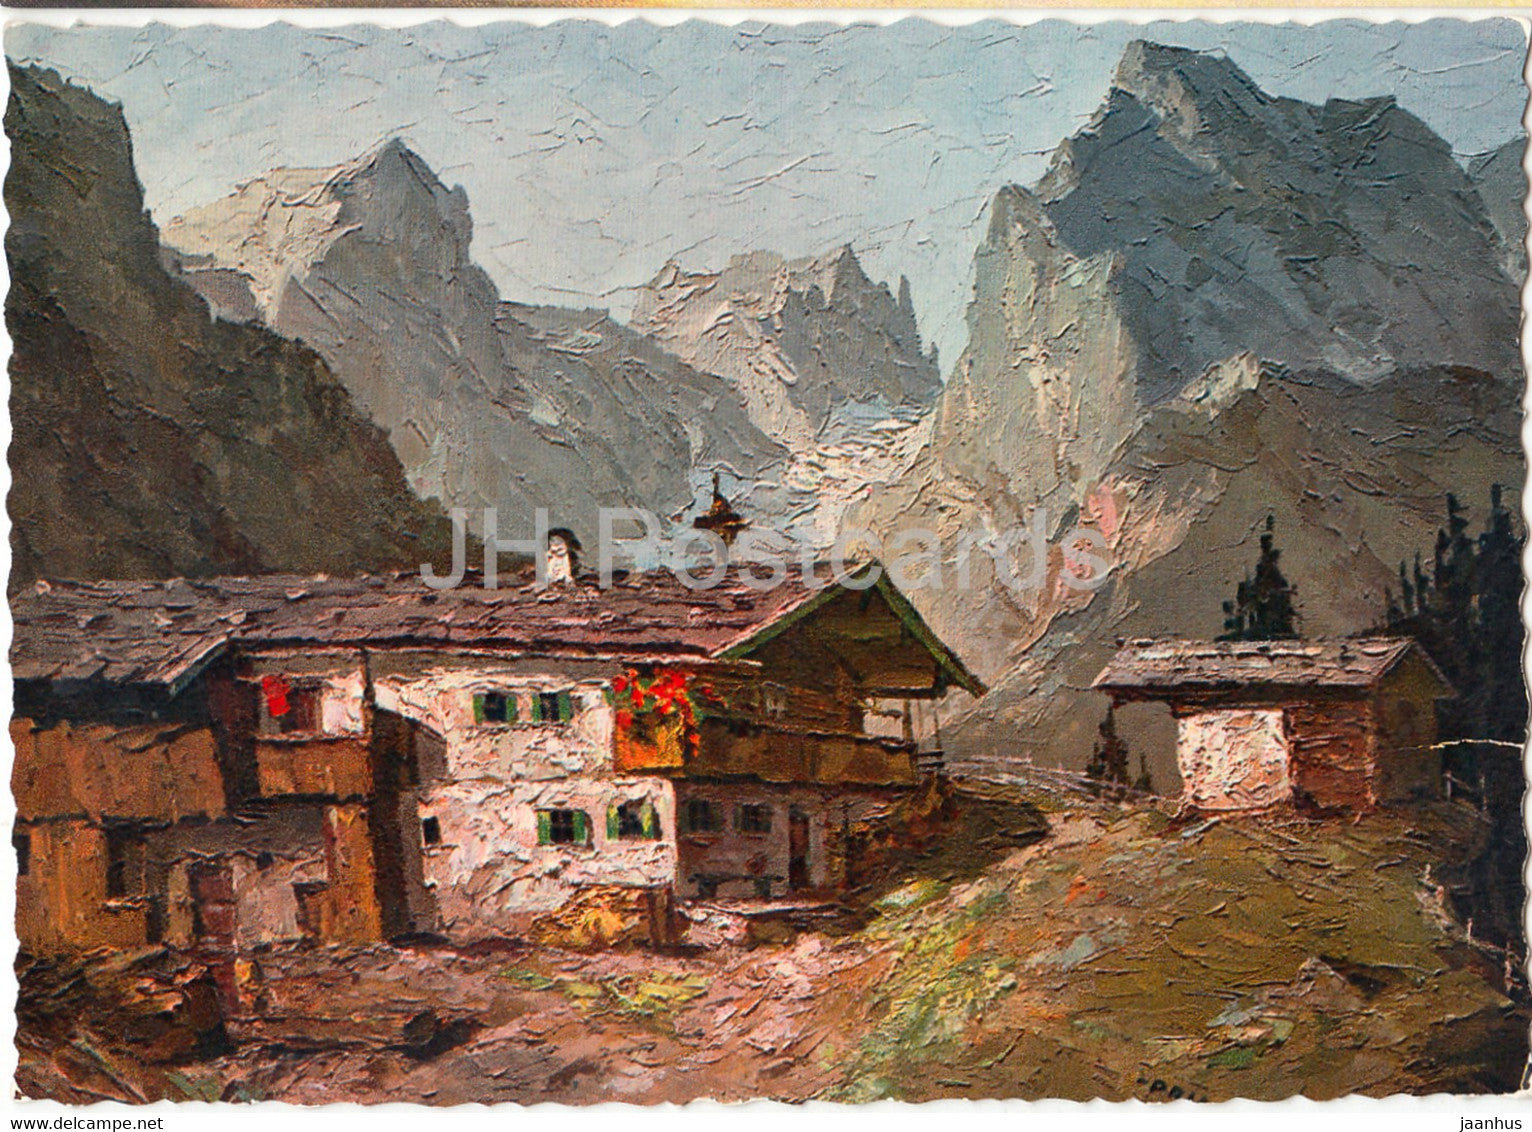 painting - Gehoft im Wilden Kaiser - Original Prinz - Austrian art - Austria - unused - JH Postcards